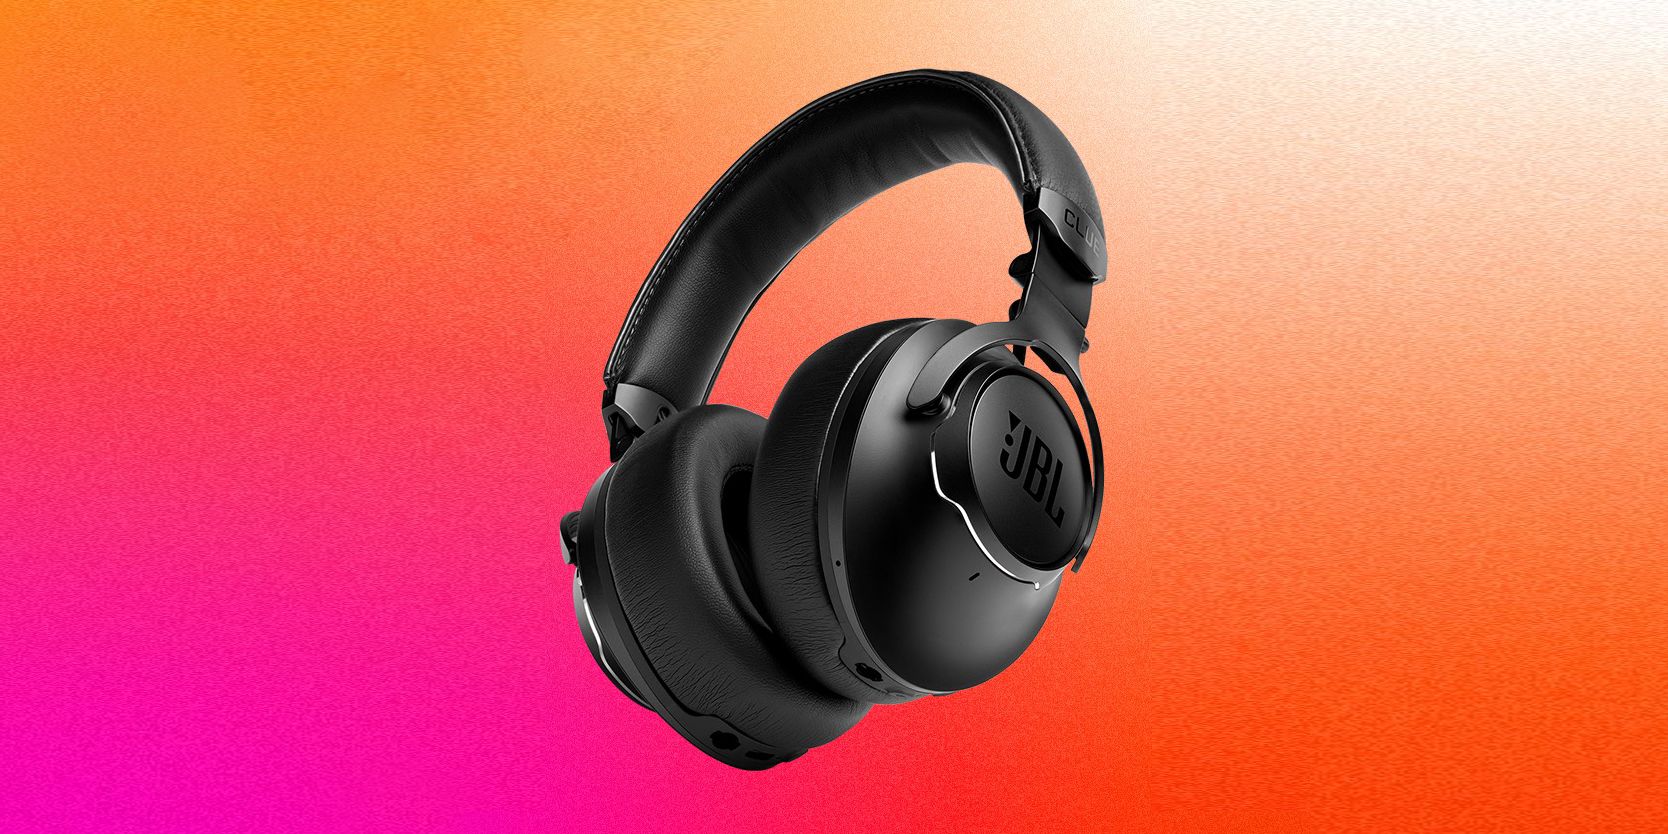 JBL Club One Headphones Hands-On Review 2020